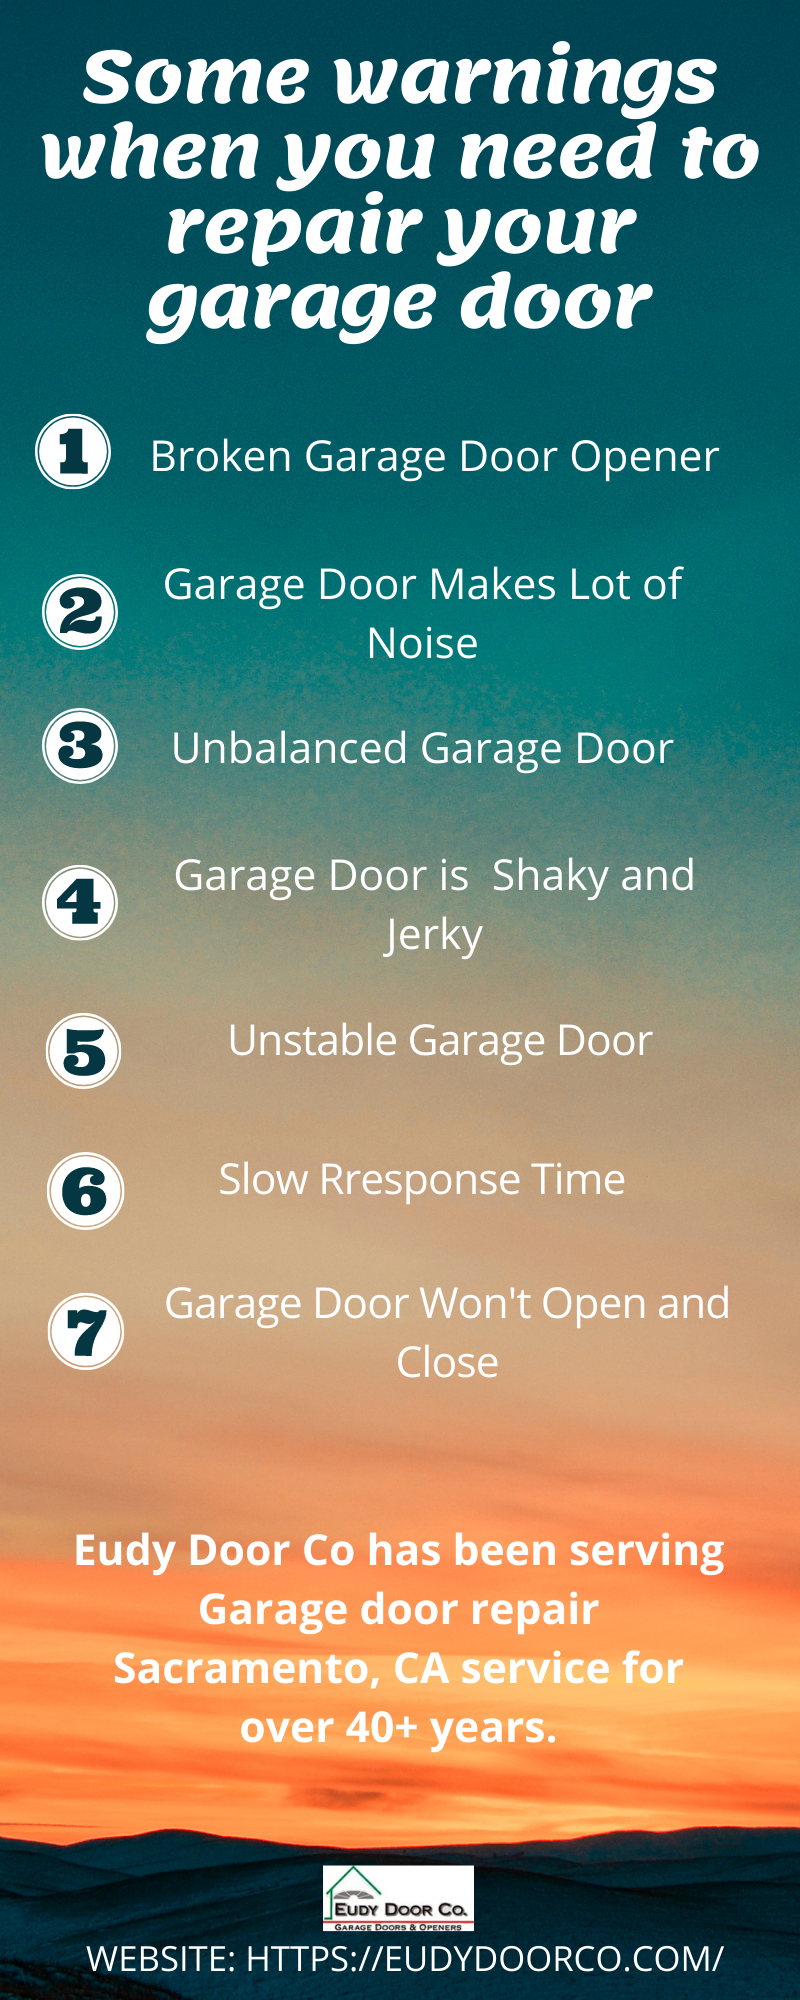 Some Warnings When You Need to Repair Your Garage Door